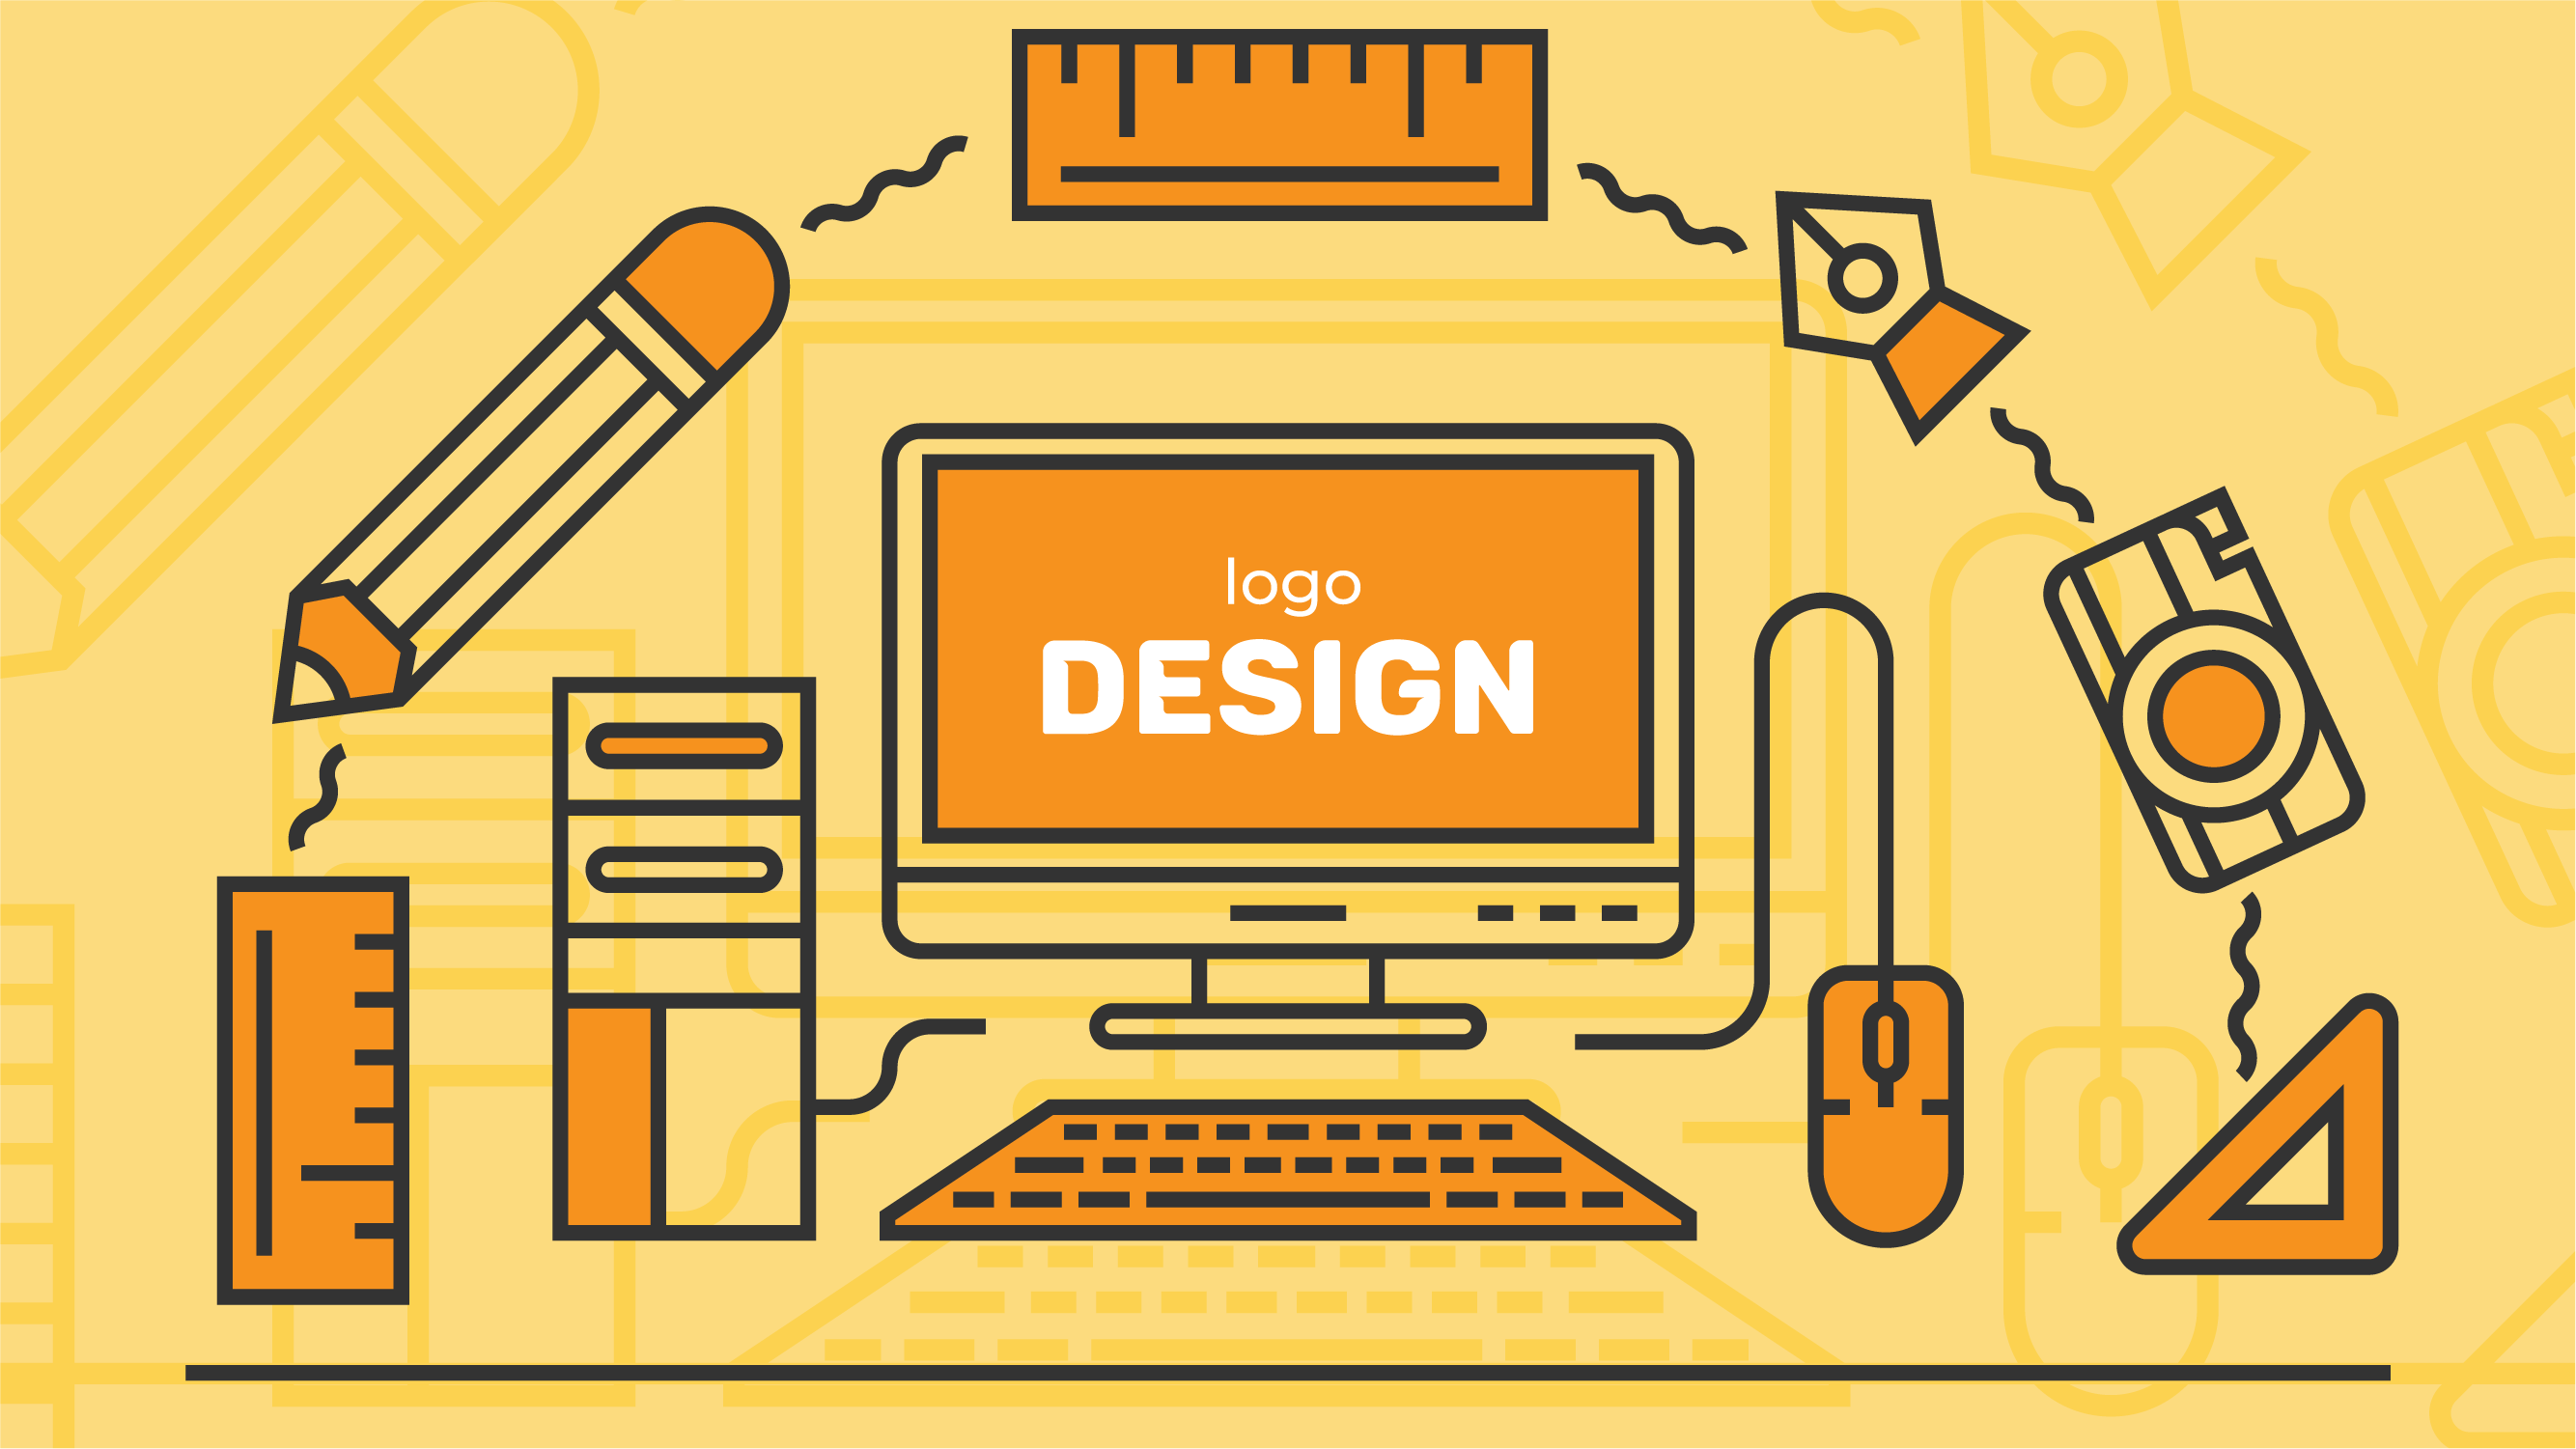 image for logo-design